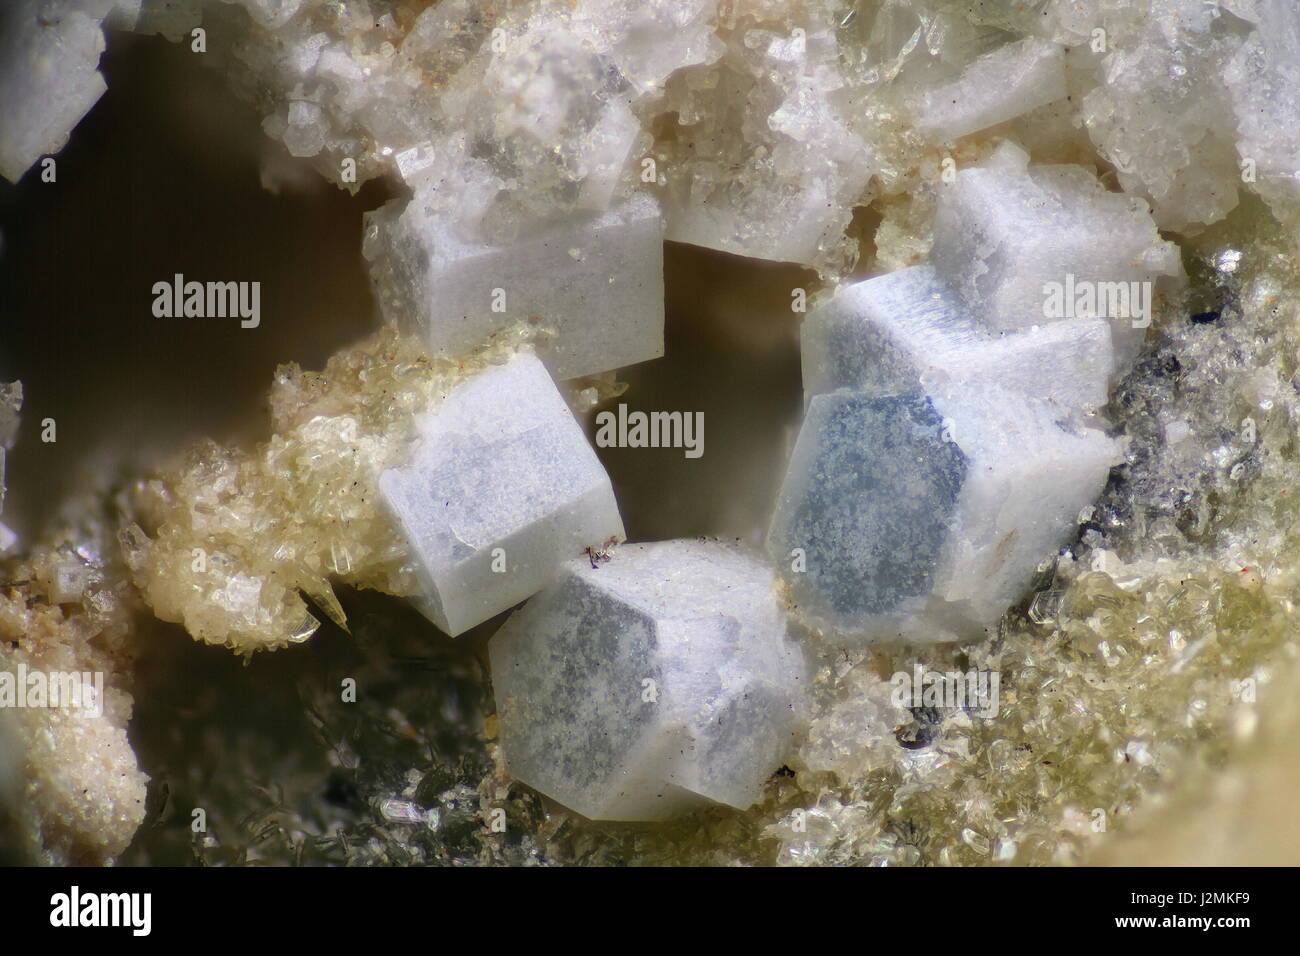 Fluoroapatite crystals from Viitaniemi feldspar quarry, Finland Stock Photo